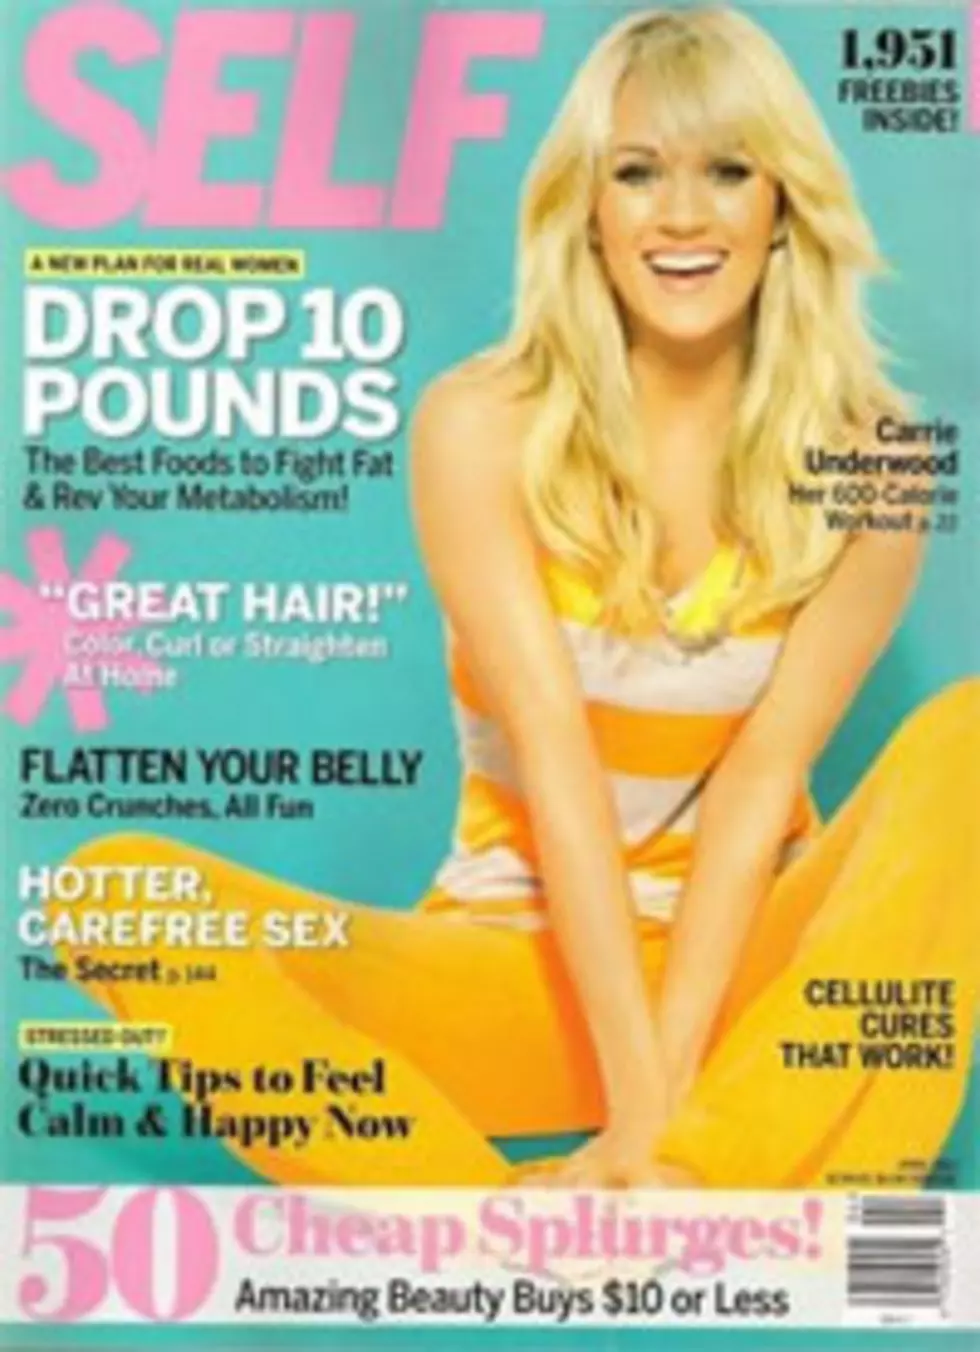 Carrie Underwood Self Magazine Cover: Singer Reveals Diet Tips